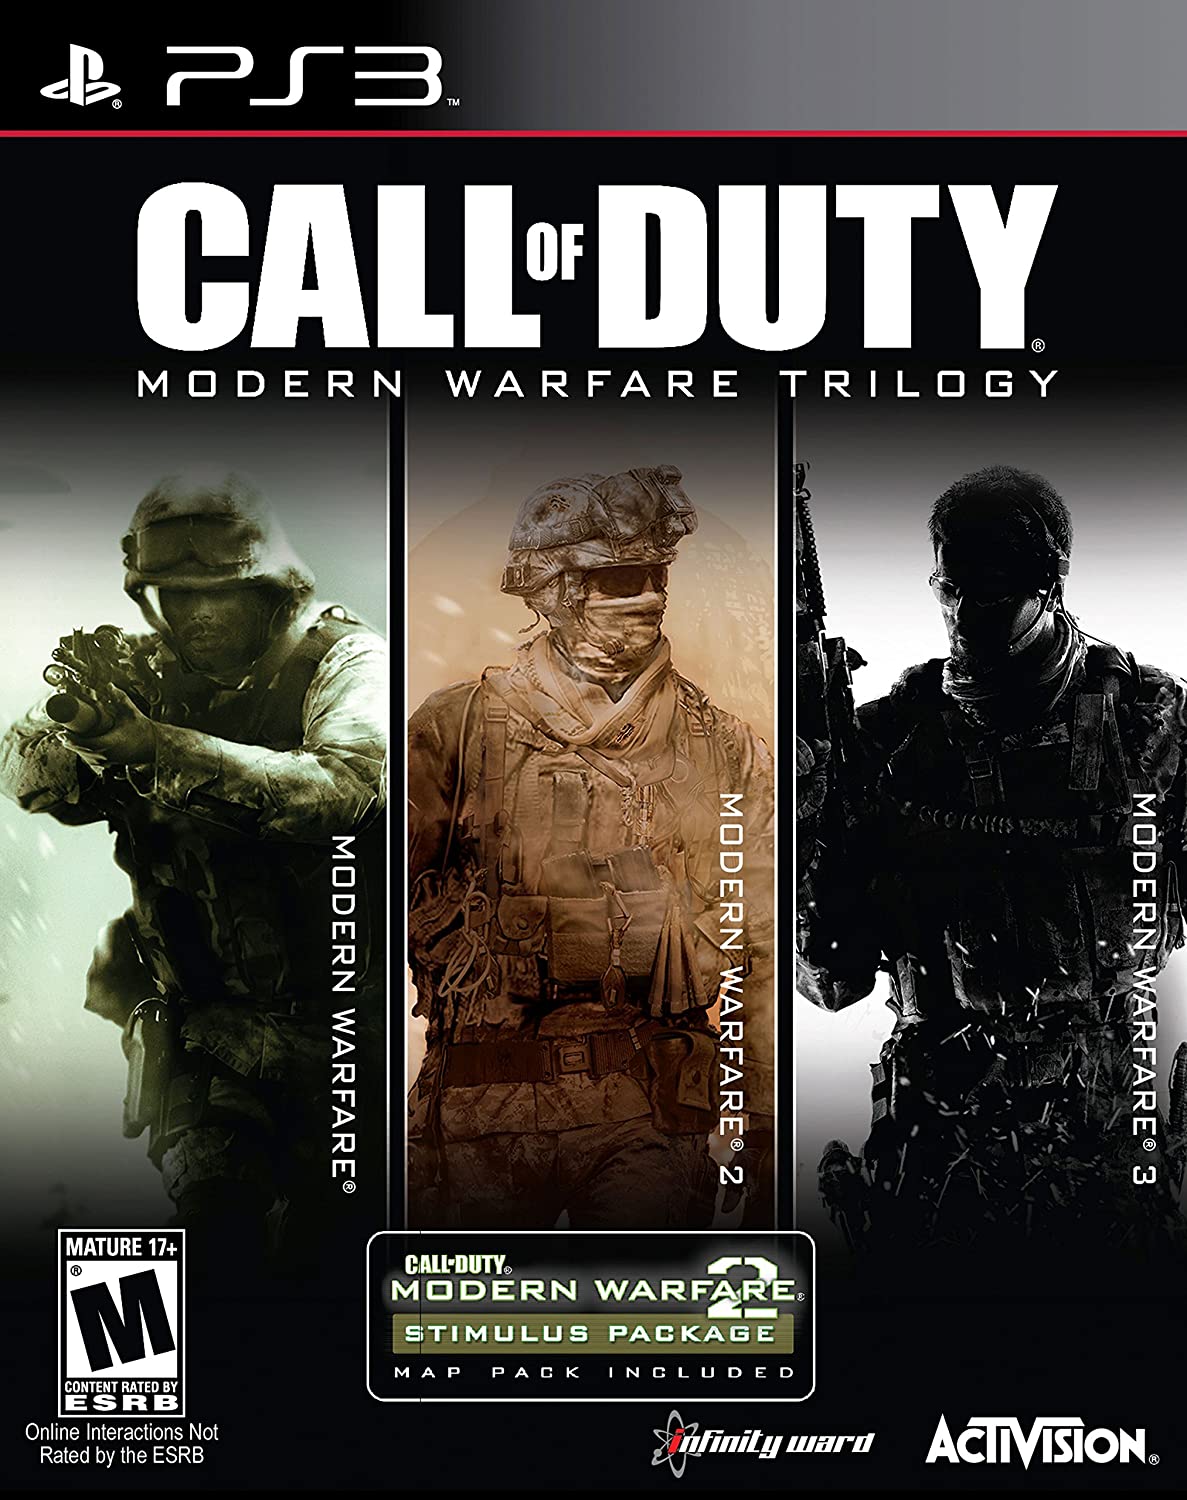 Call of Duty Modern Warfare Trilogy PS3